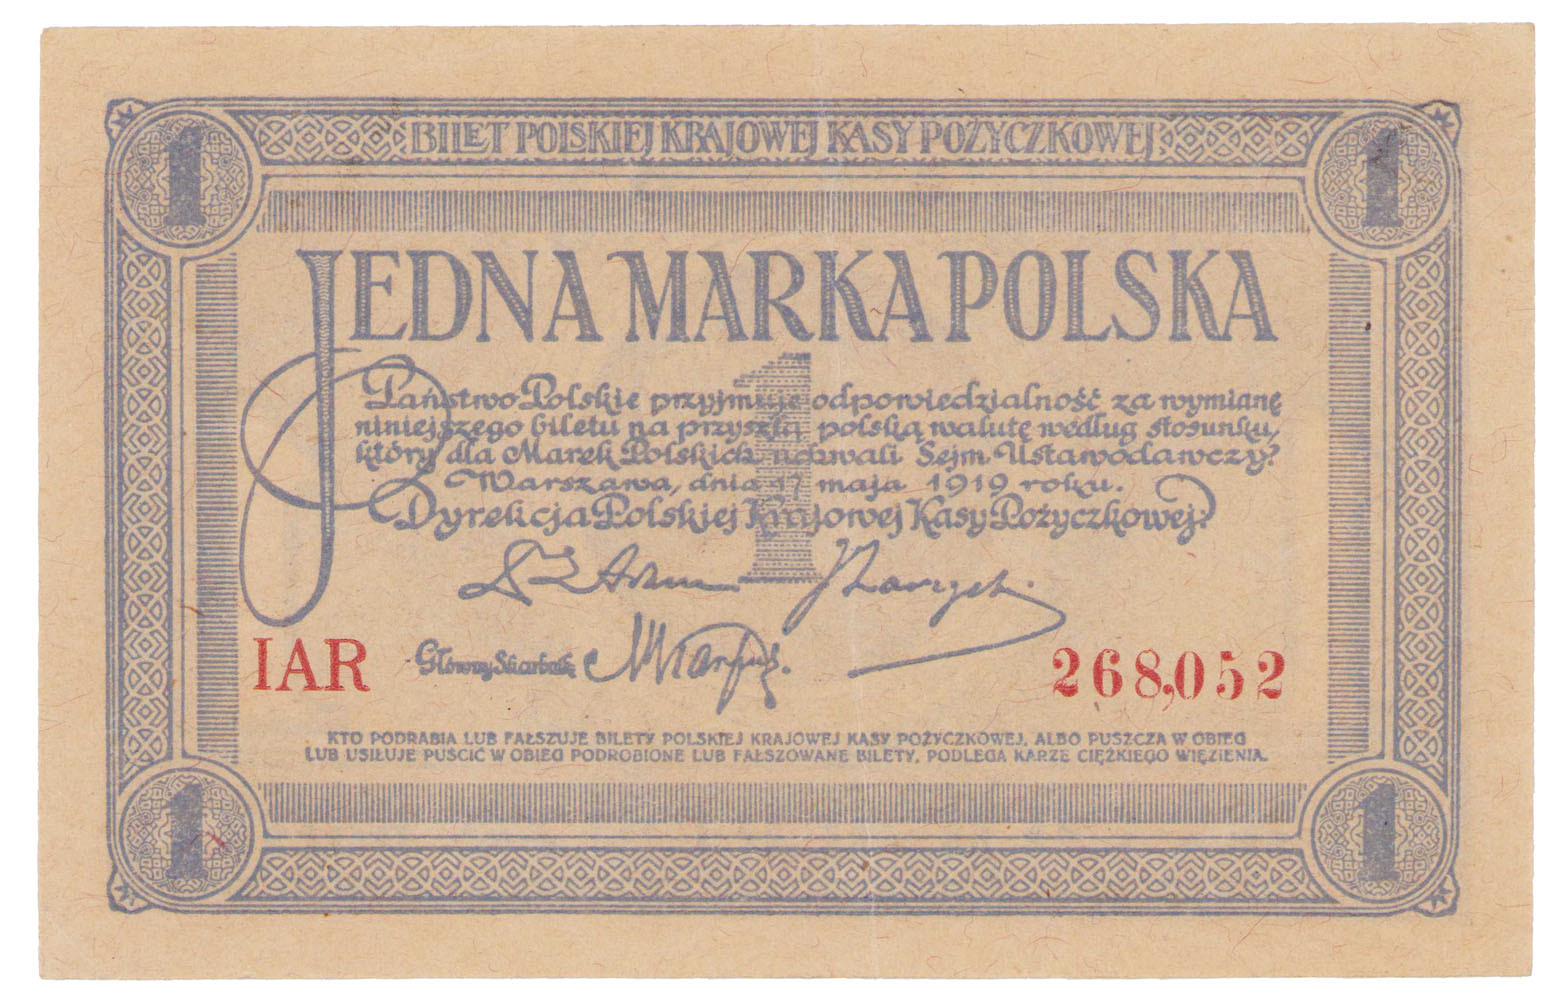 1 marka polska 1919 seria IAR